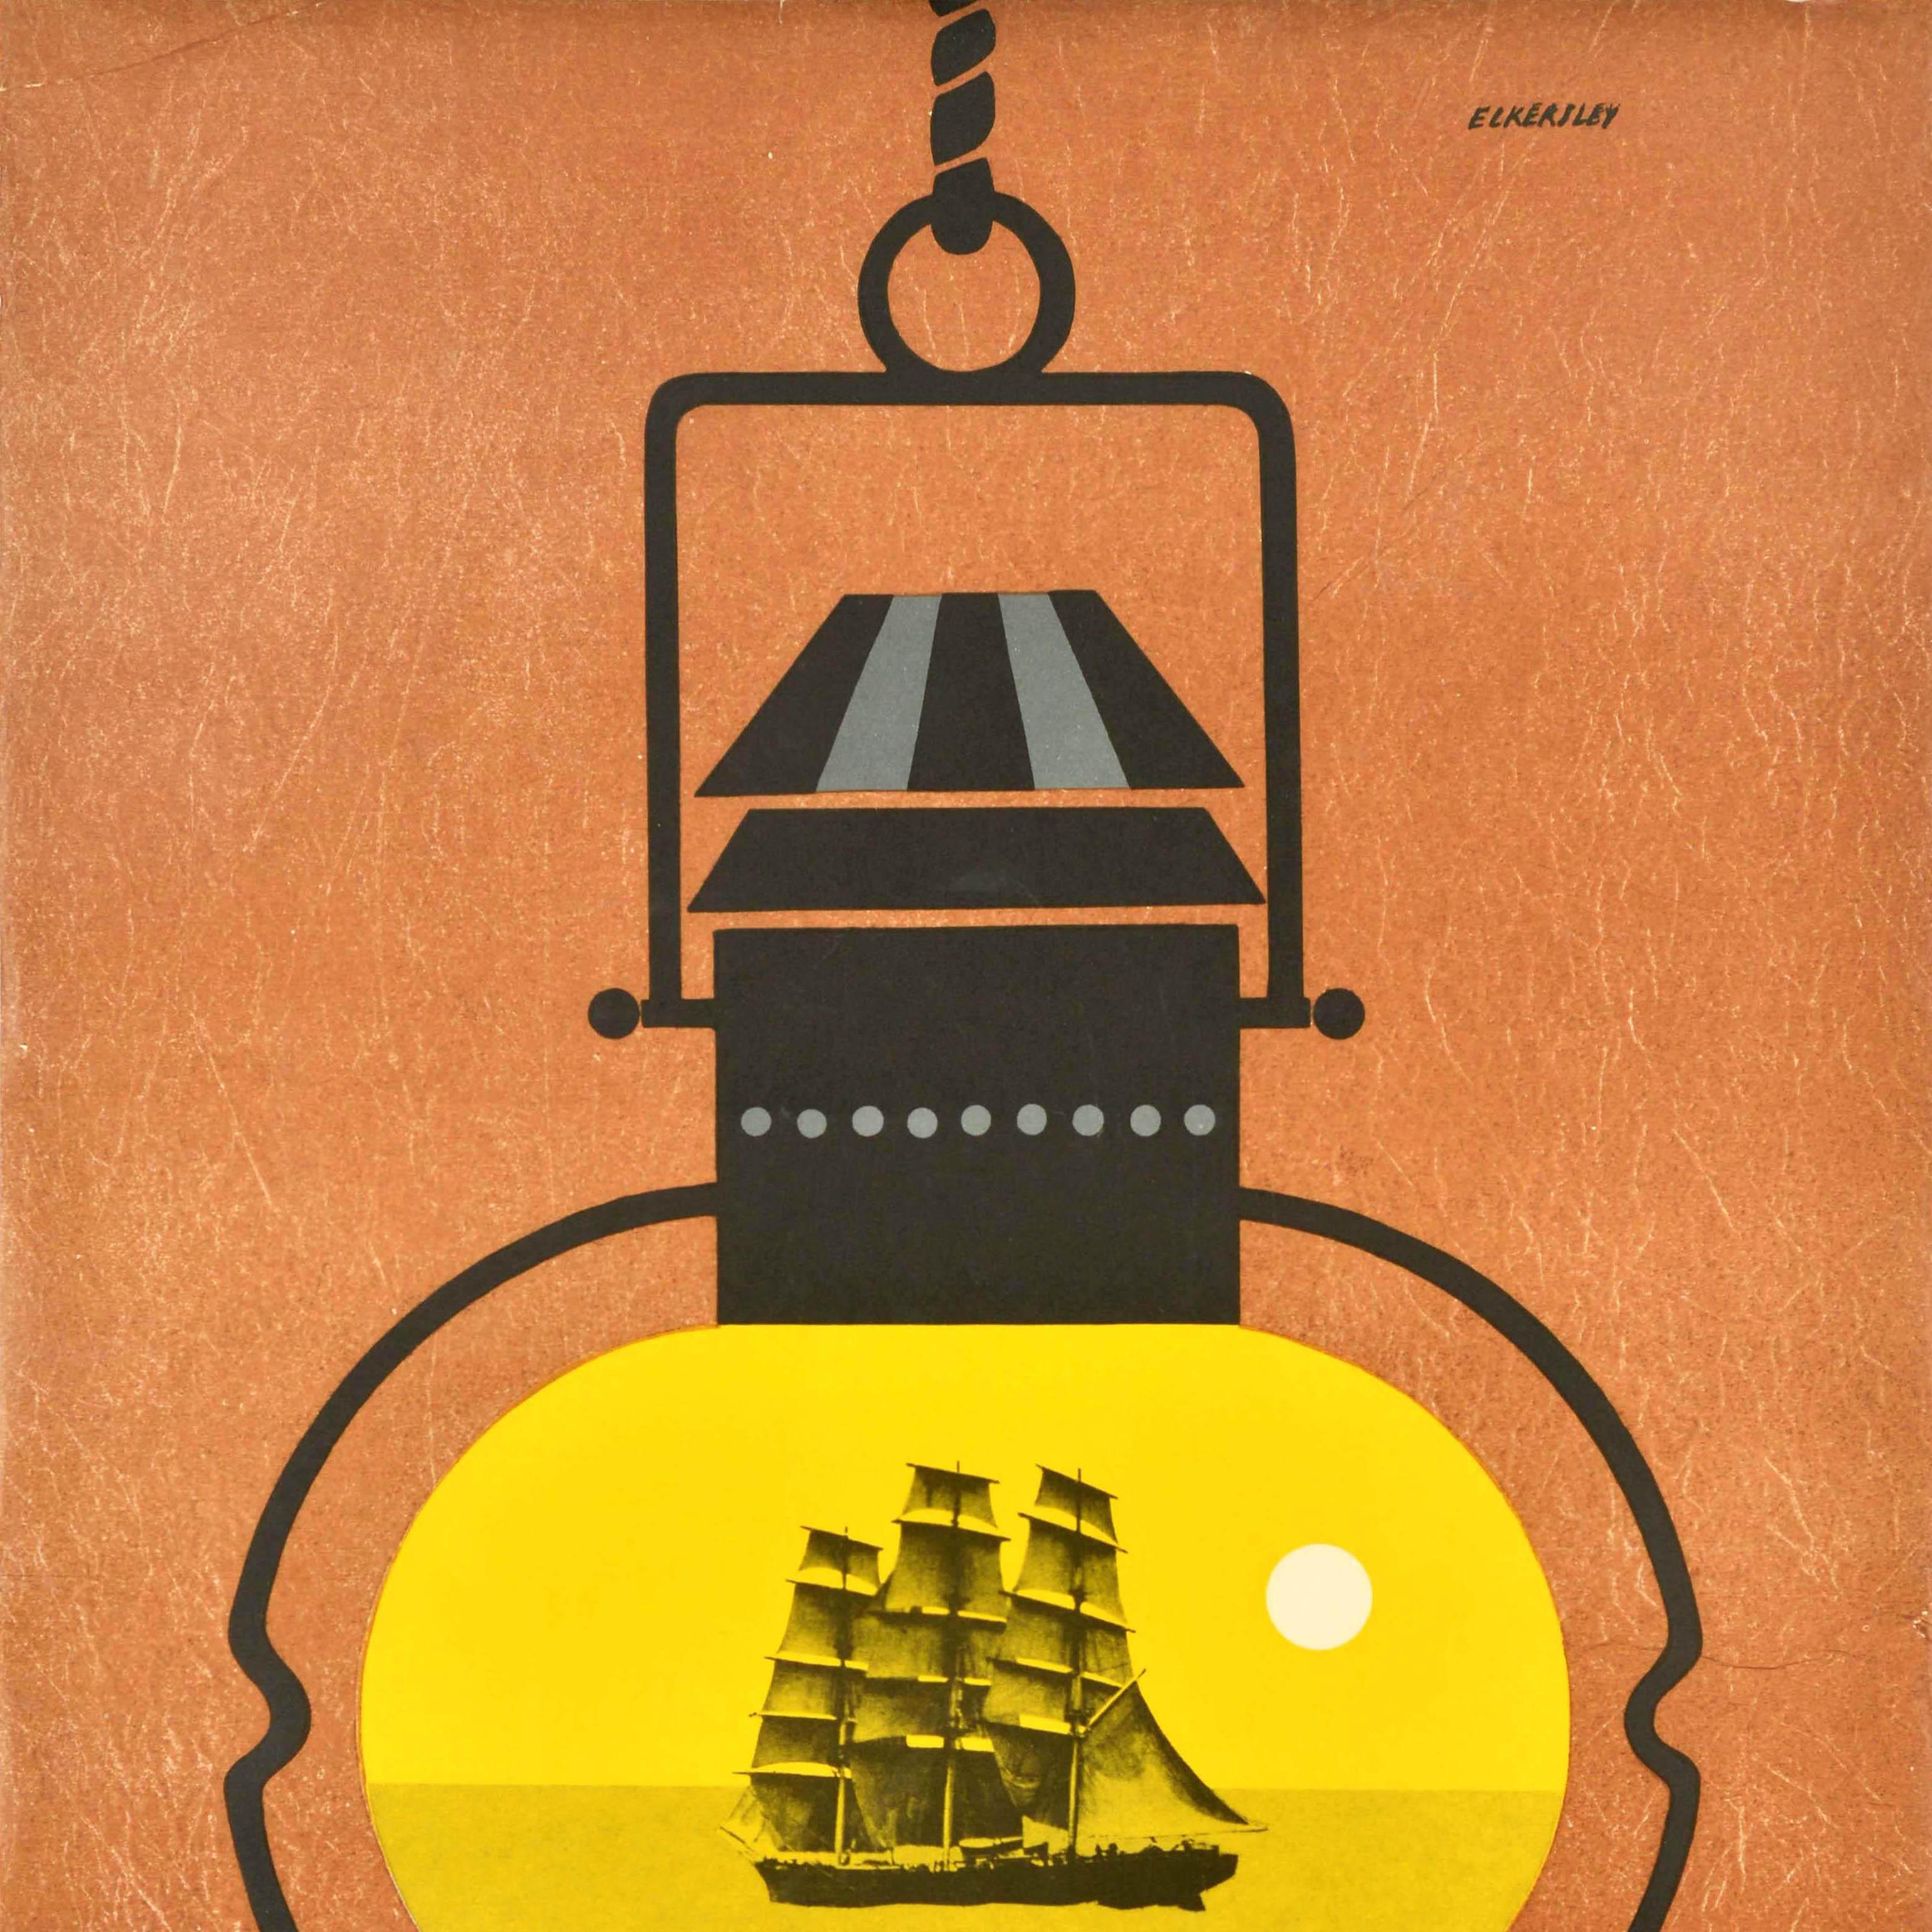 British Original Vintage Travel Poster Cutty Sark Clipper Ship London UK Tom Eckersley For Sale